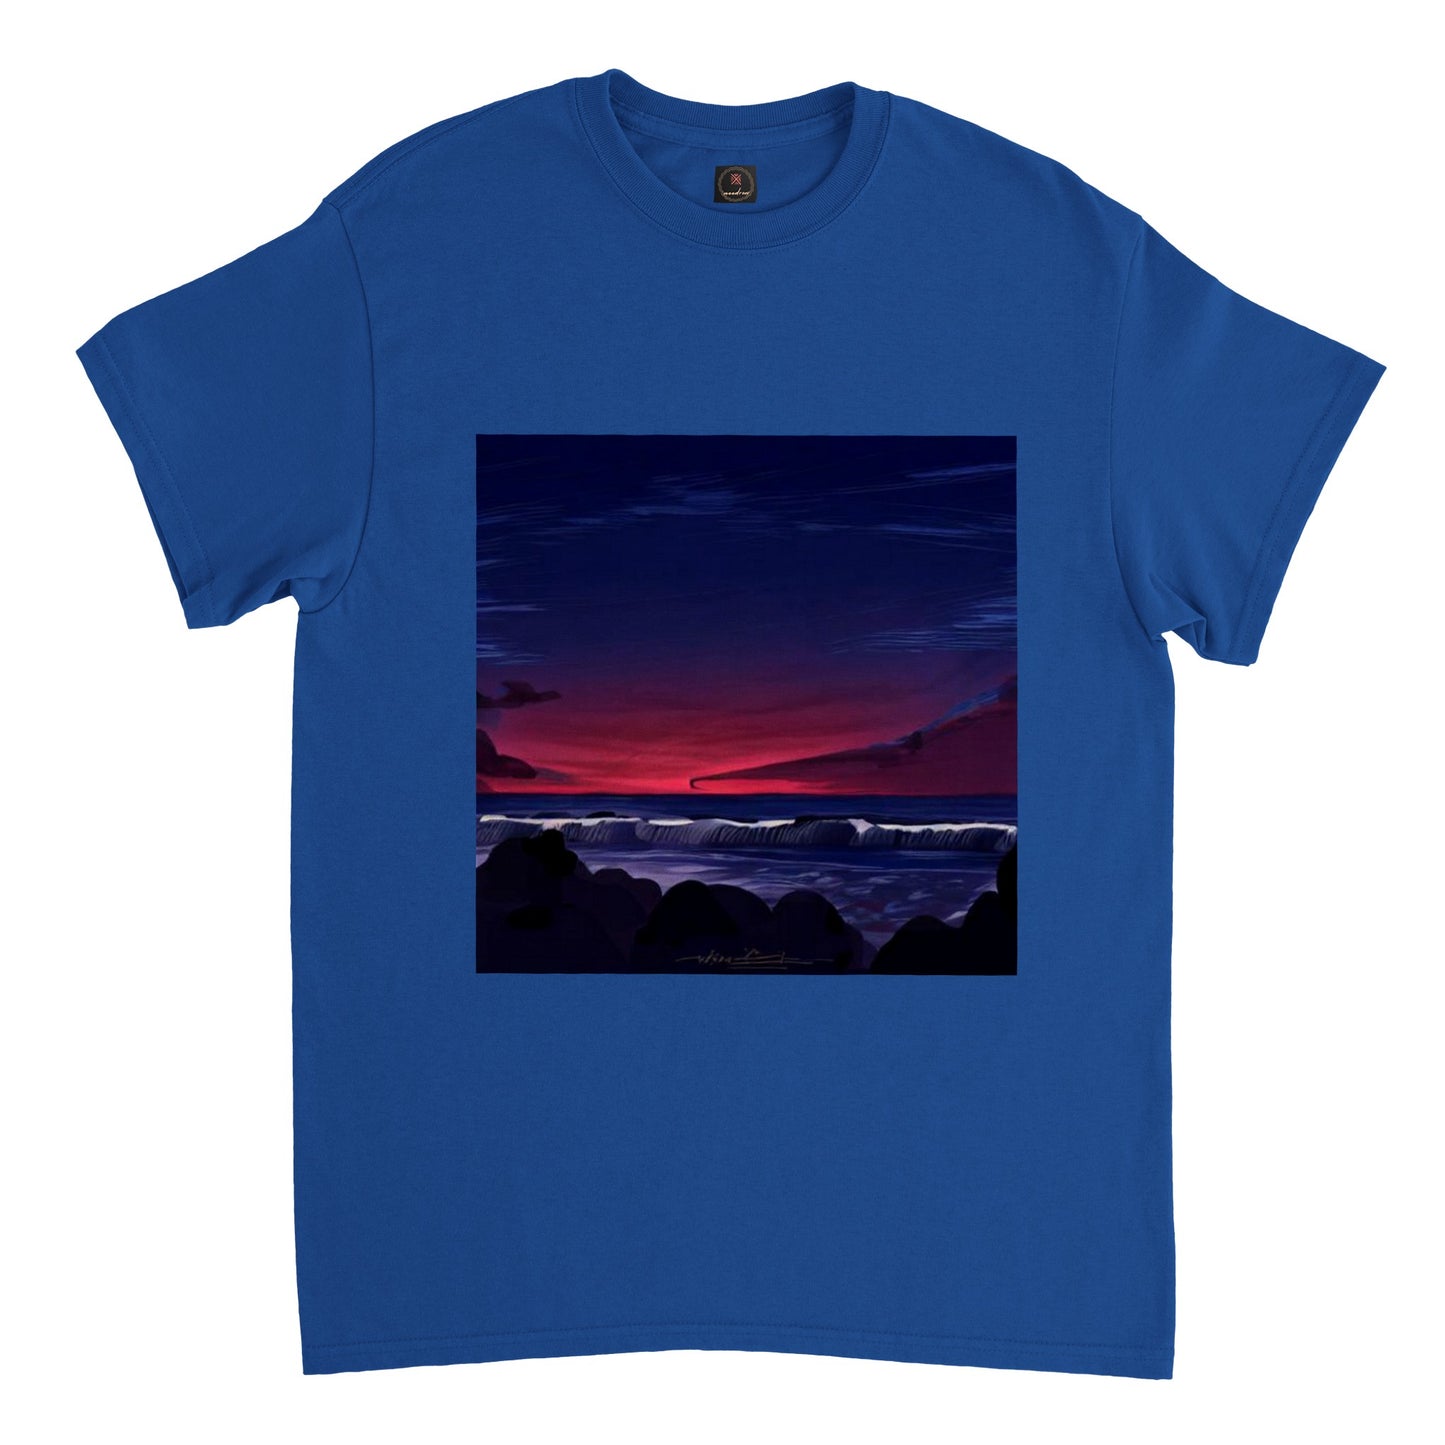 Heavyweight Unisex Crewneck T-shirt "Romance of the Ocean"